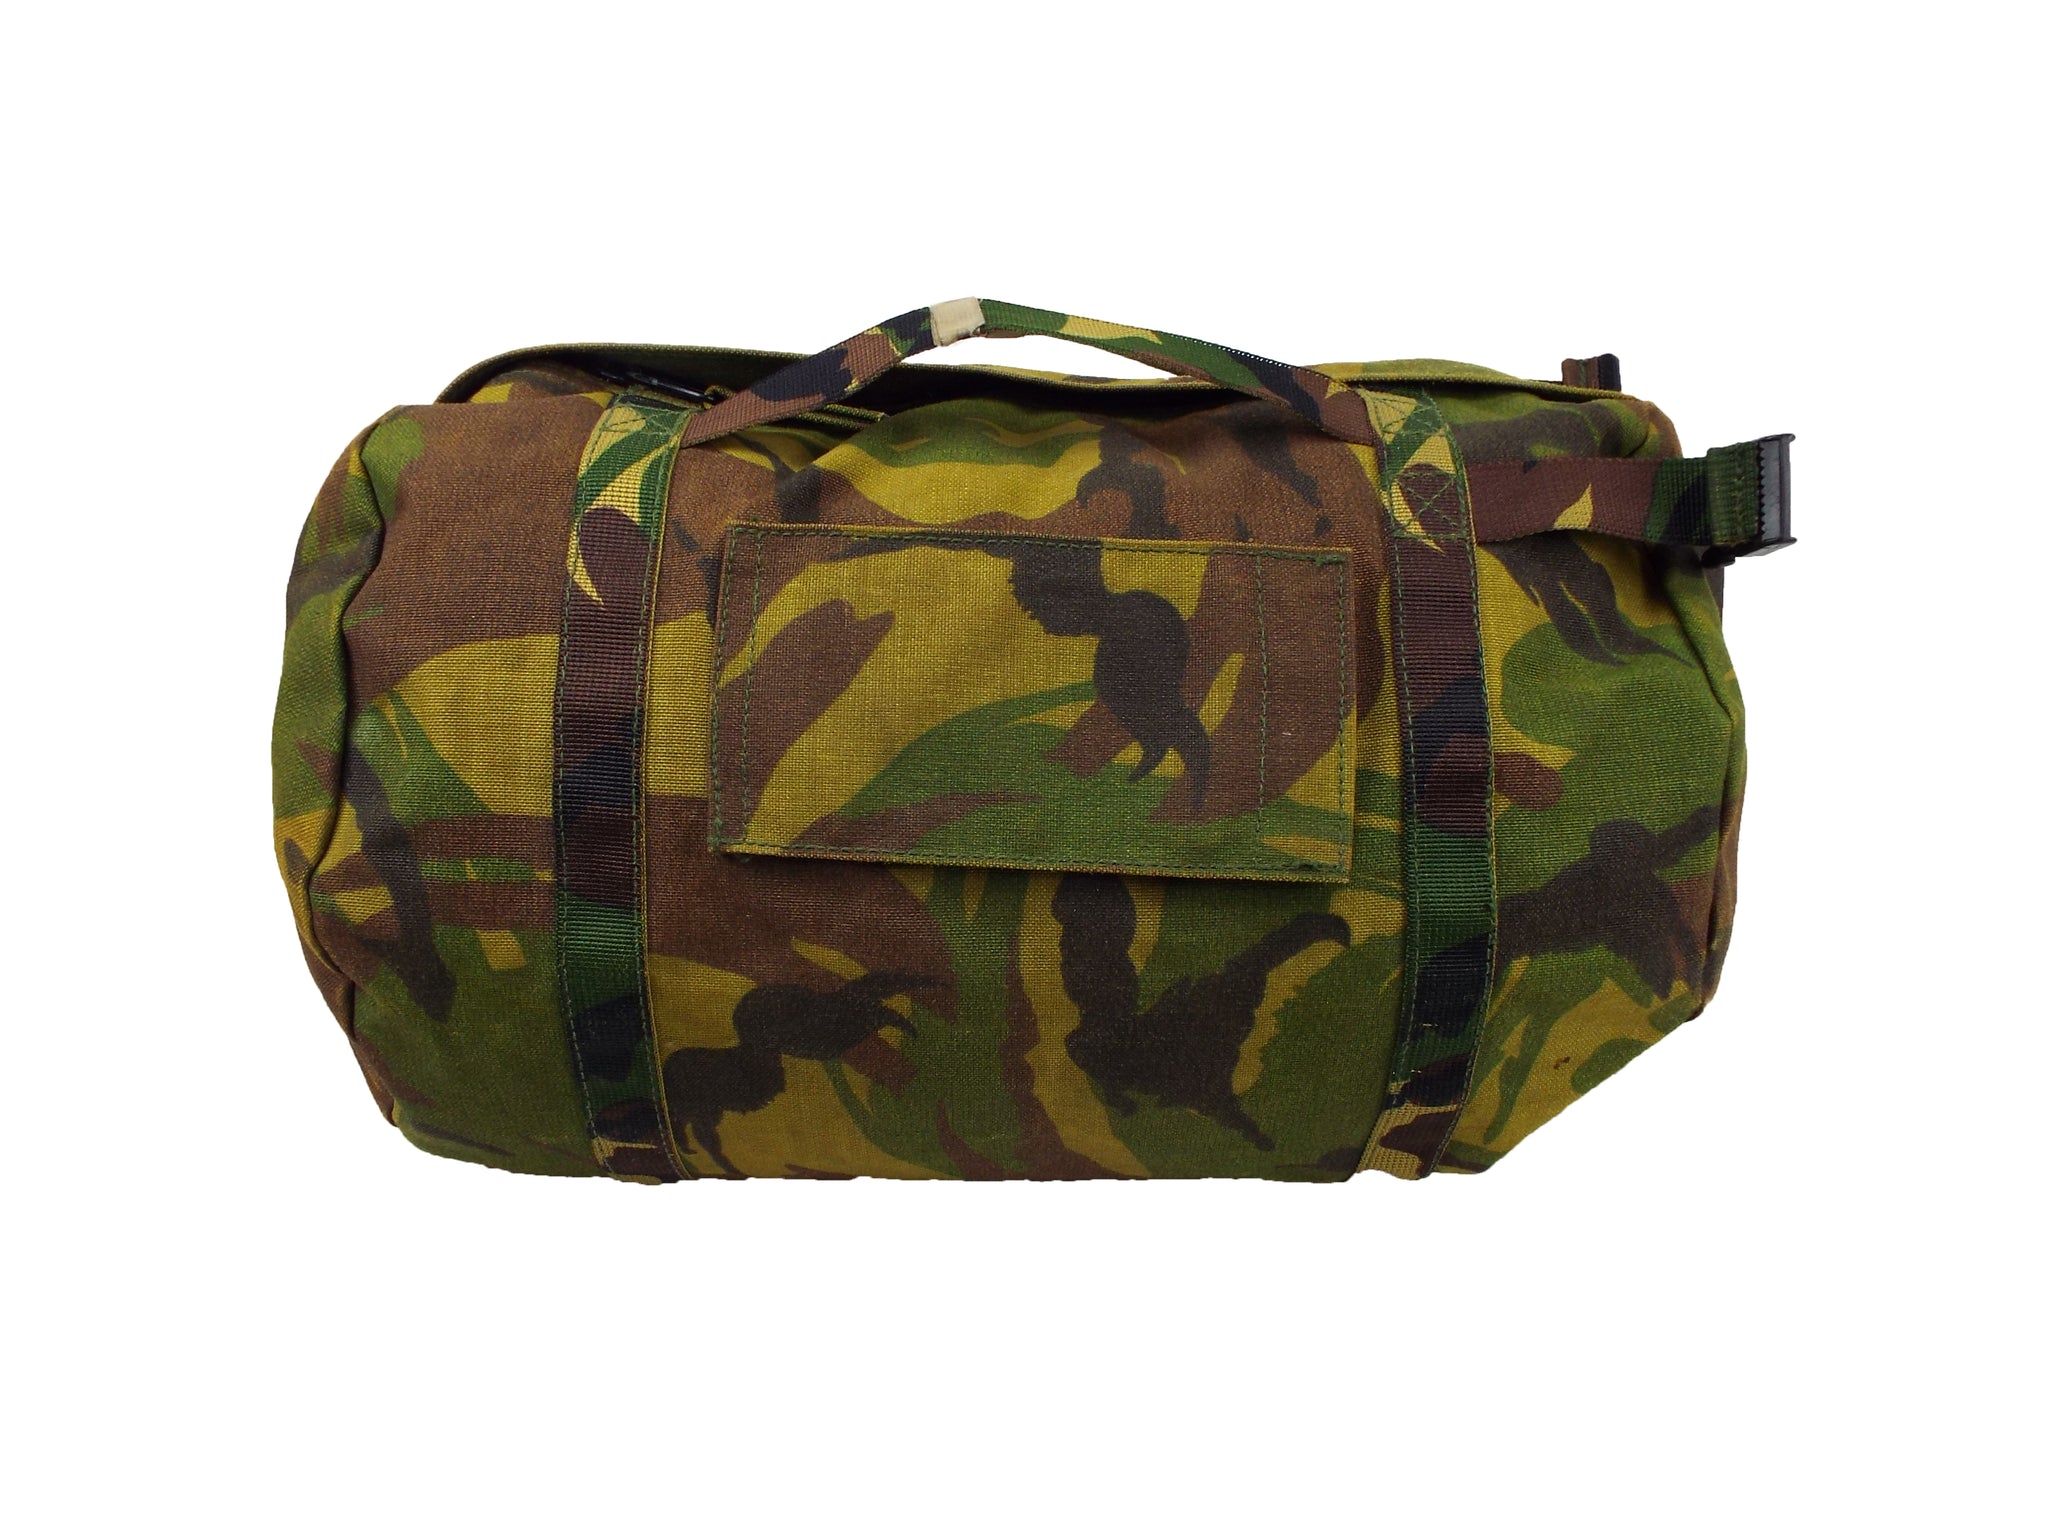 Dutch Army - 10 litre Water Resistant Carry/Stuff Bag - NBC